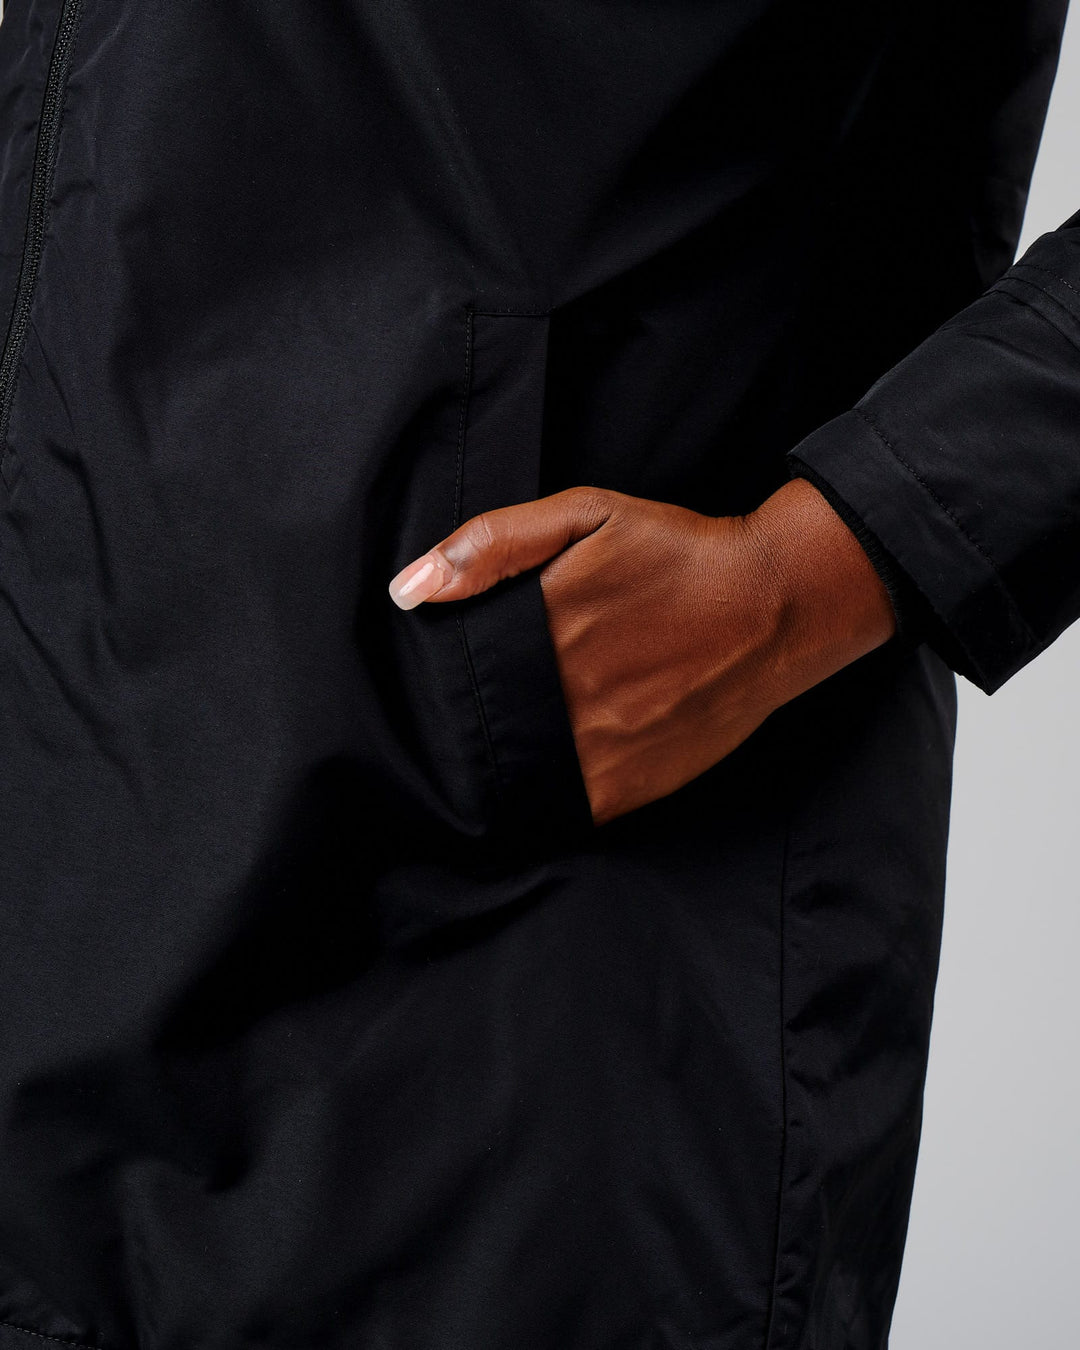 Woman wearing Auxiliary Jacket - Black